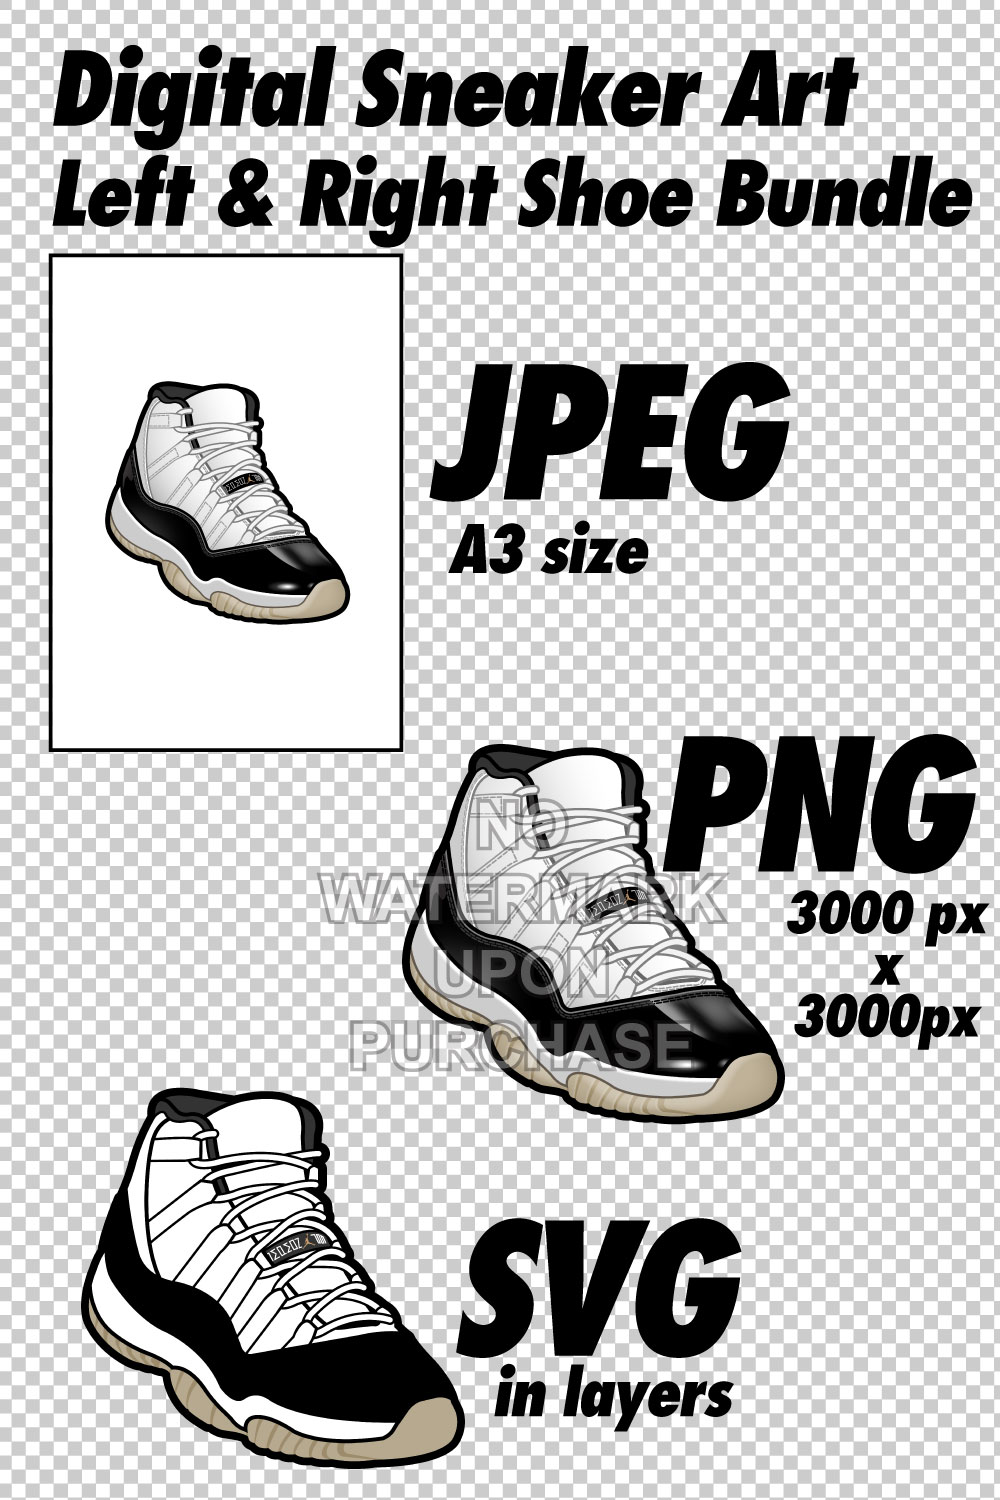 Air Jordan 11 Gratitude JPEG PNG SVG Sneaker Art right & left shoe bundle Digital Download pinterest preview image.